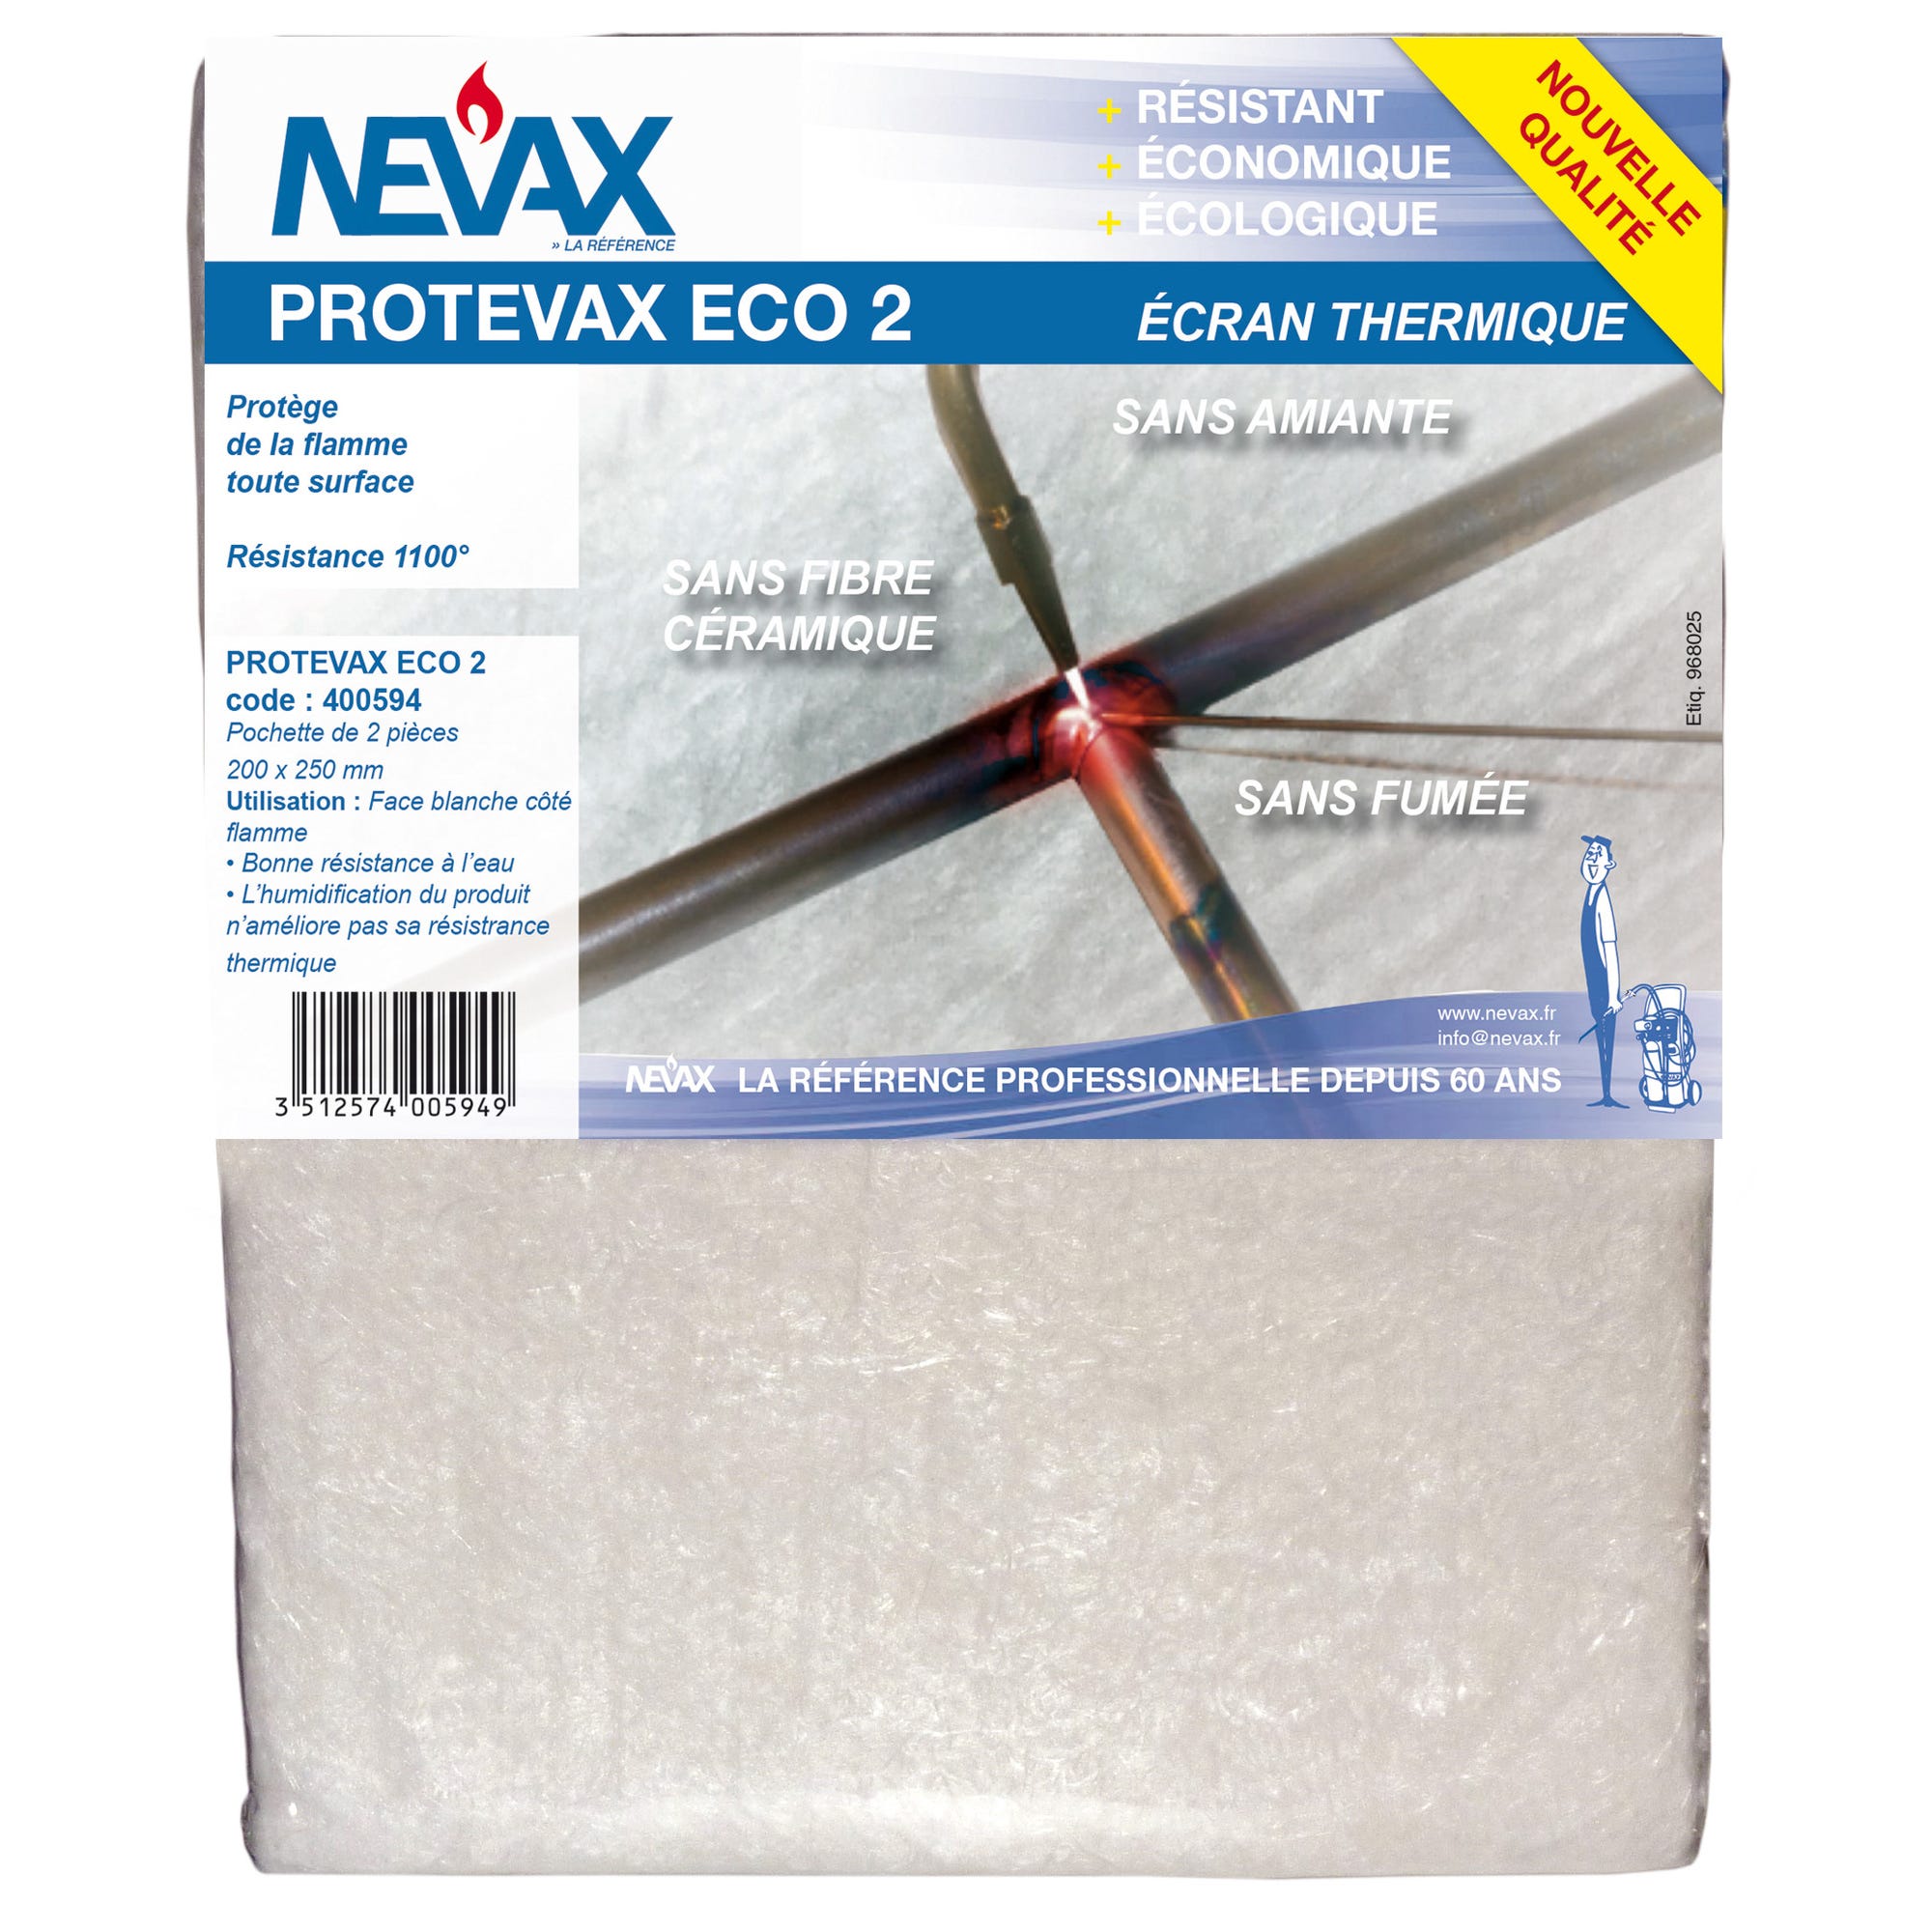 Ecran thermique protecteur max 1200° - NEVAX 0